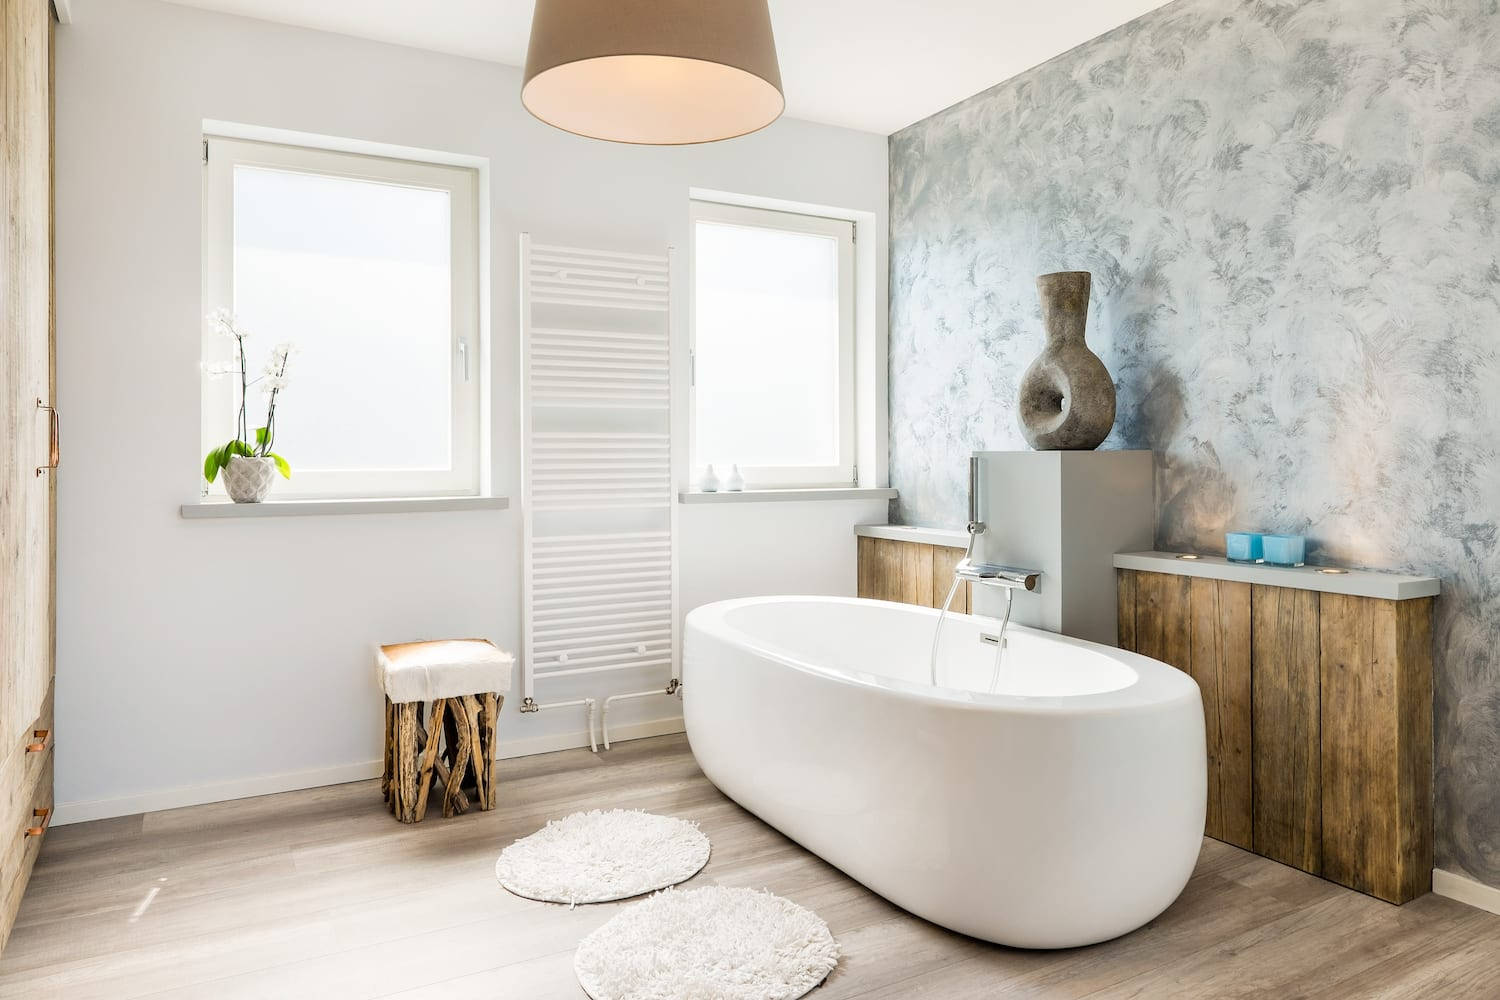 "Luxurious White Oblong Bathtub in a Serene Setting" Wallpaper